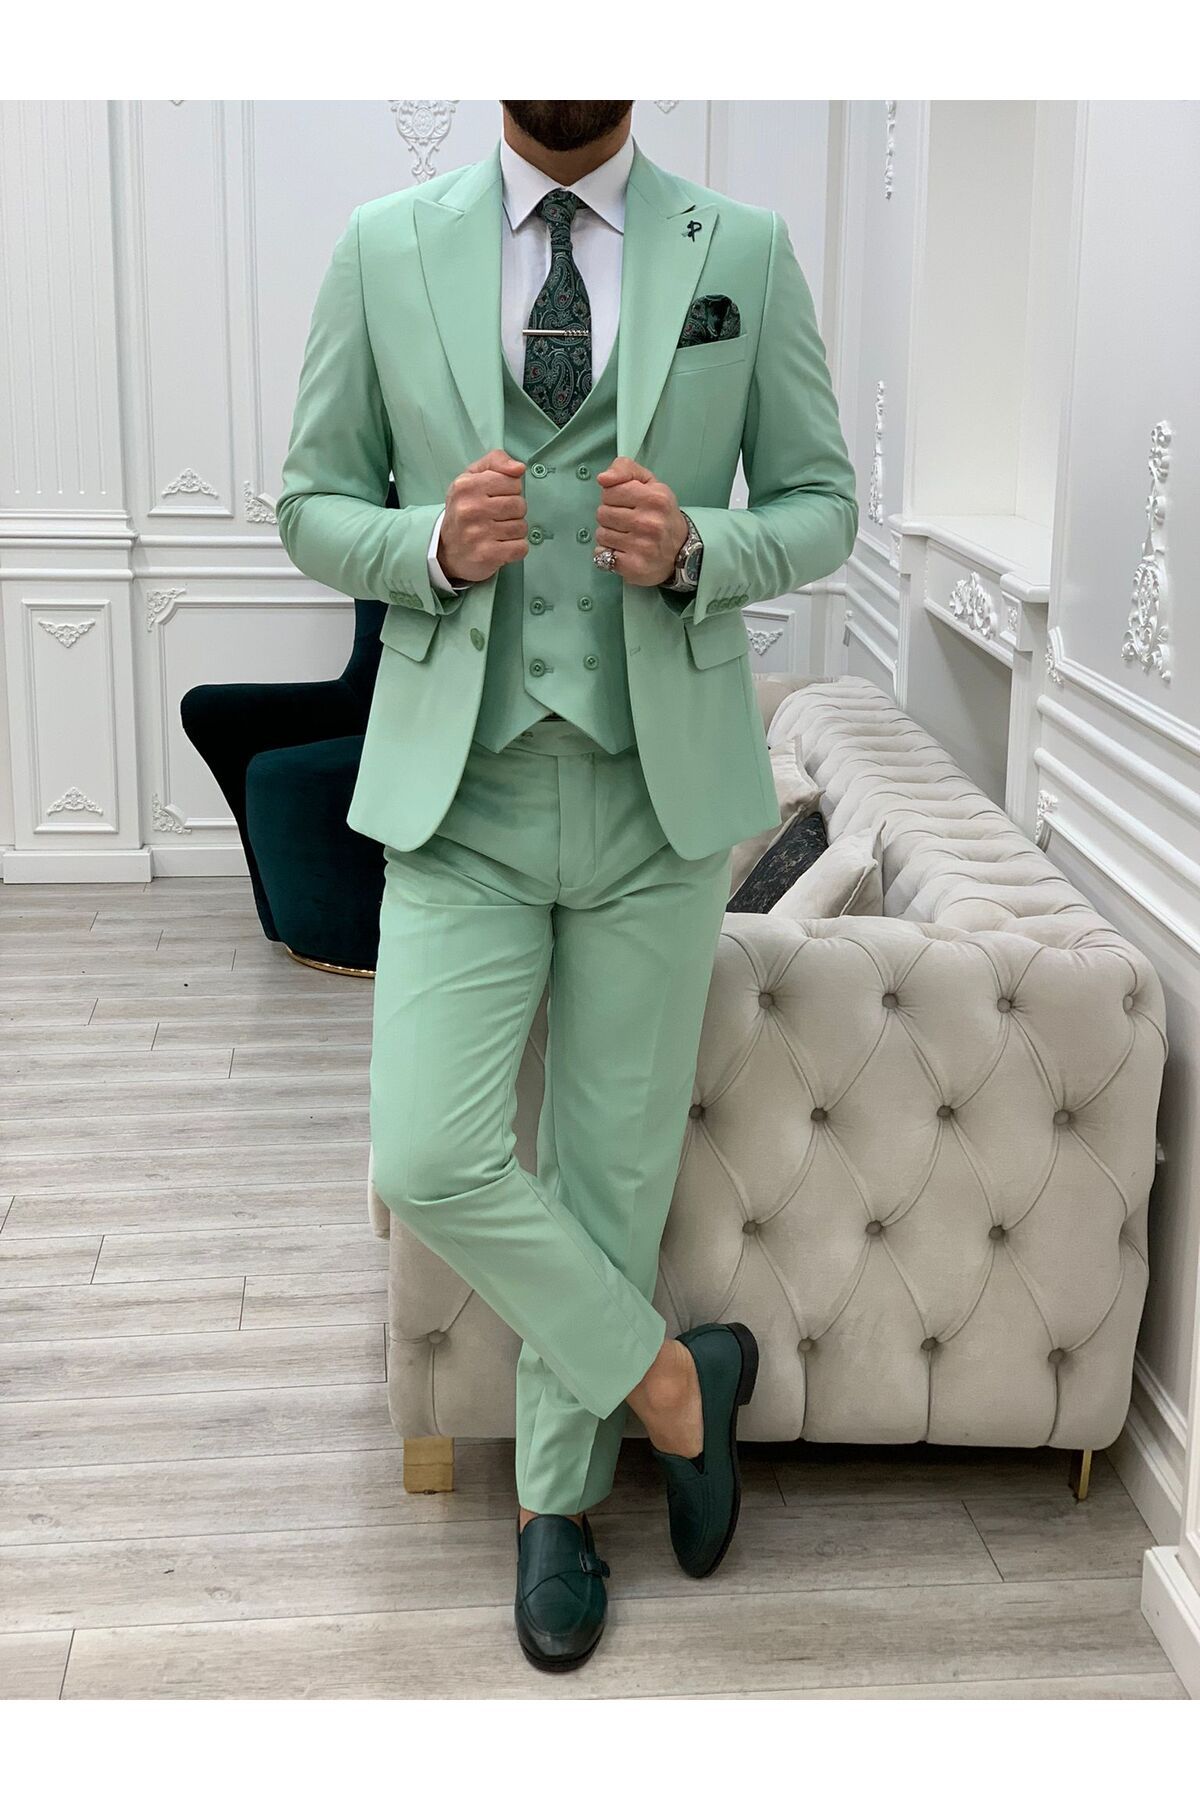 LONATOLİA Erkek Takım Elbise Kırlangıç Yaka İtalyan Kesim Slim Fit Ceket Yelek Pantolon